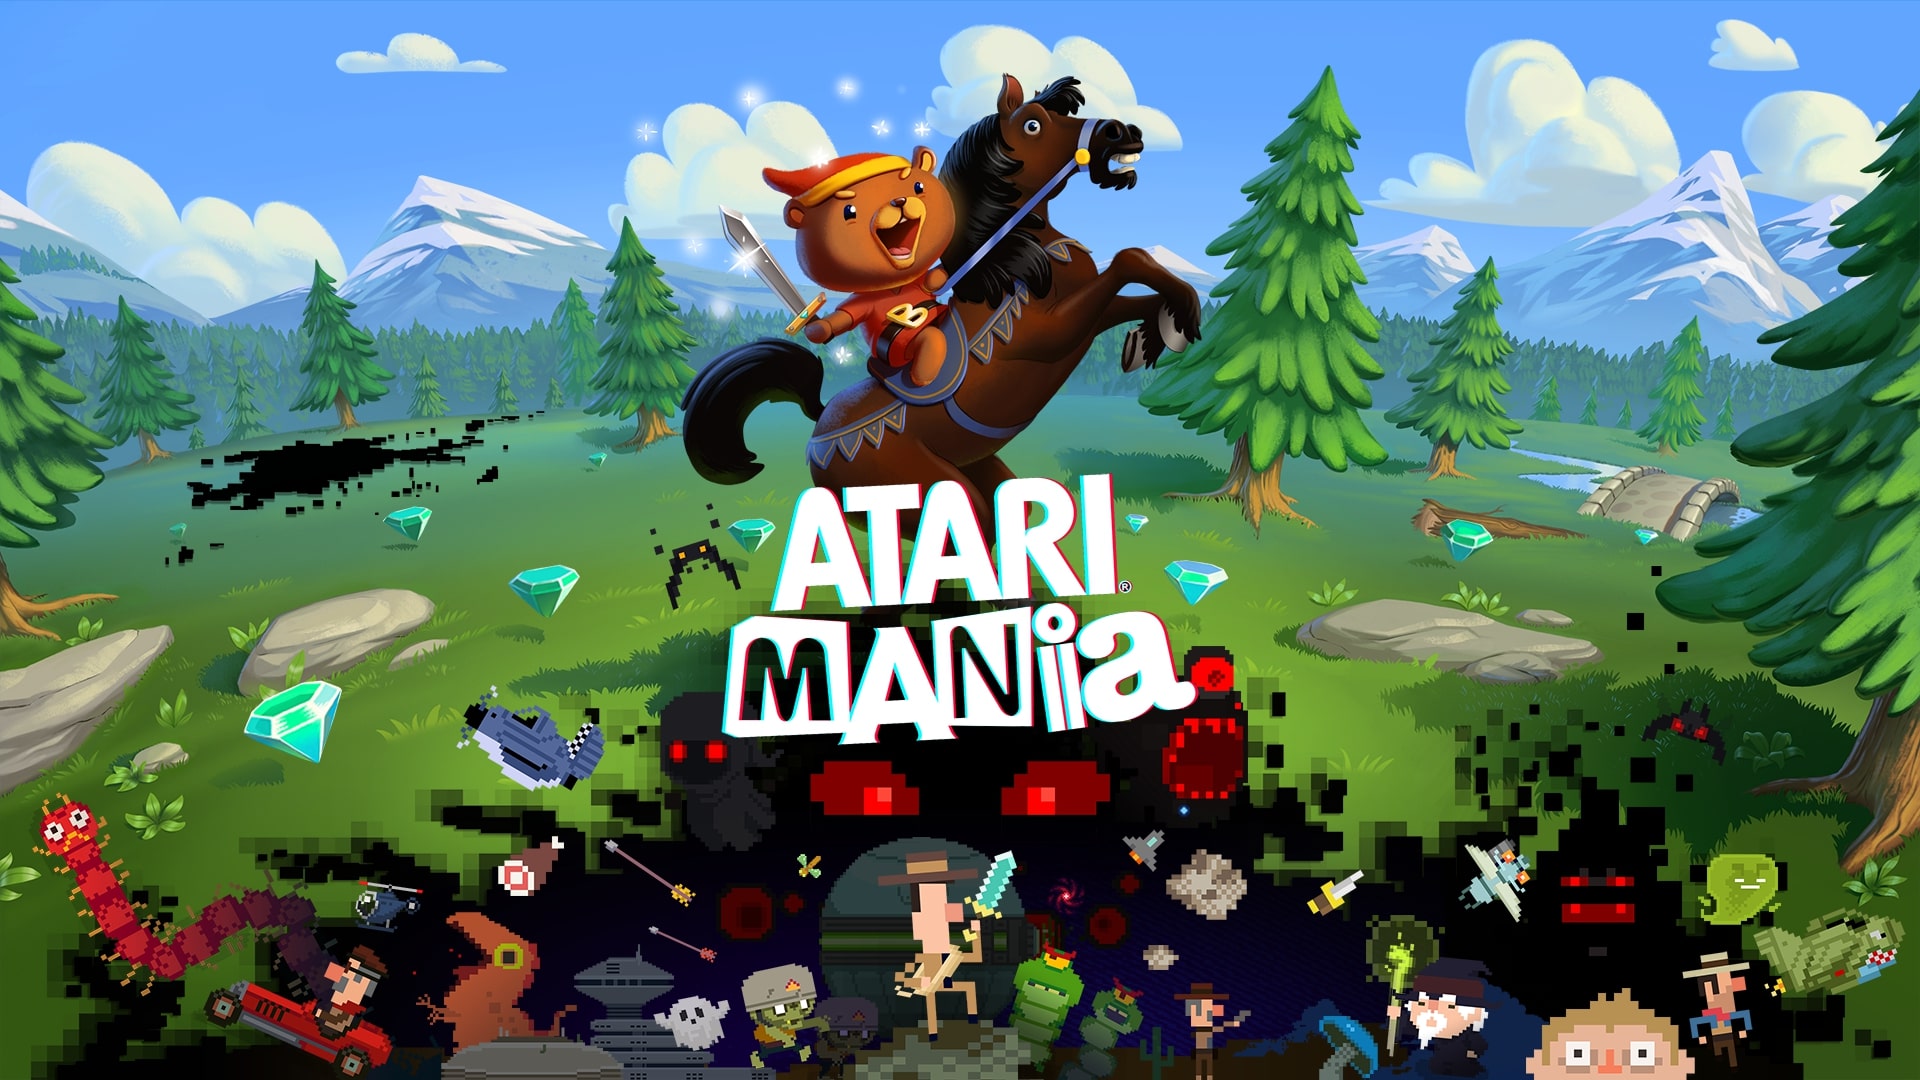 Atari Mania is WarioWare, but with iconic Atari classics